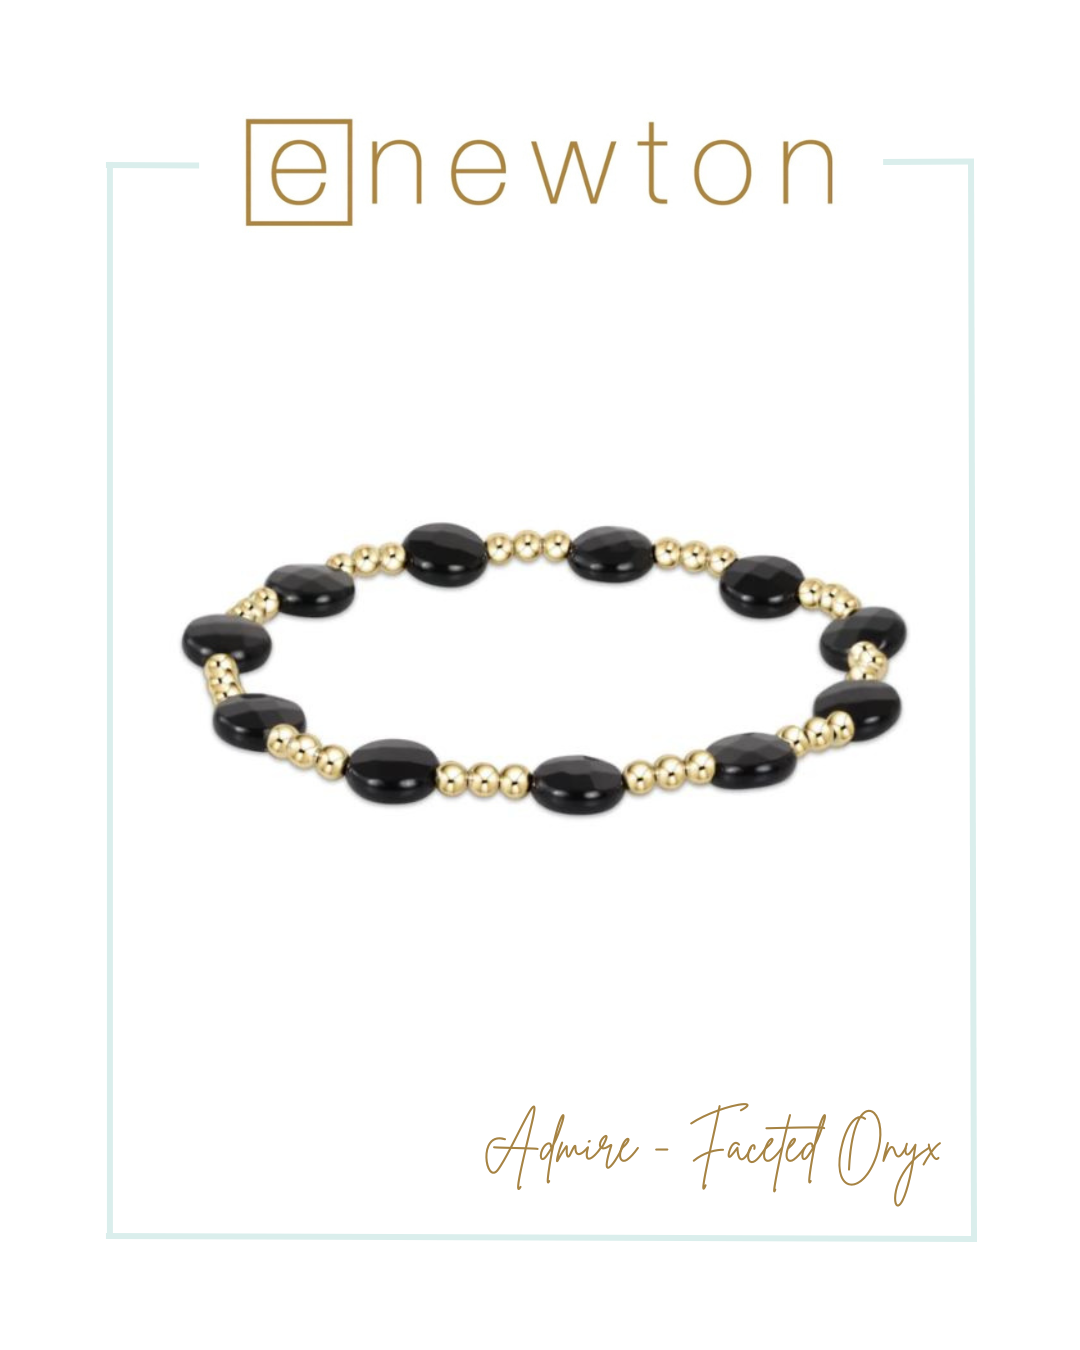 E Newton Admire Gold 3mm Bead Bracelet - Faceted Onyx-Bracelets-ENEWTON-The Village Shoppe, Women’s Fashion Boutique, Shop Online and In Store - Located in Muscle Shoals, AL.